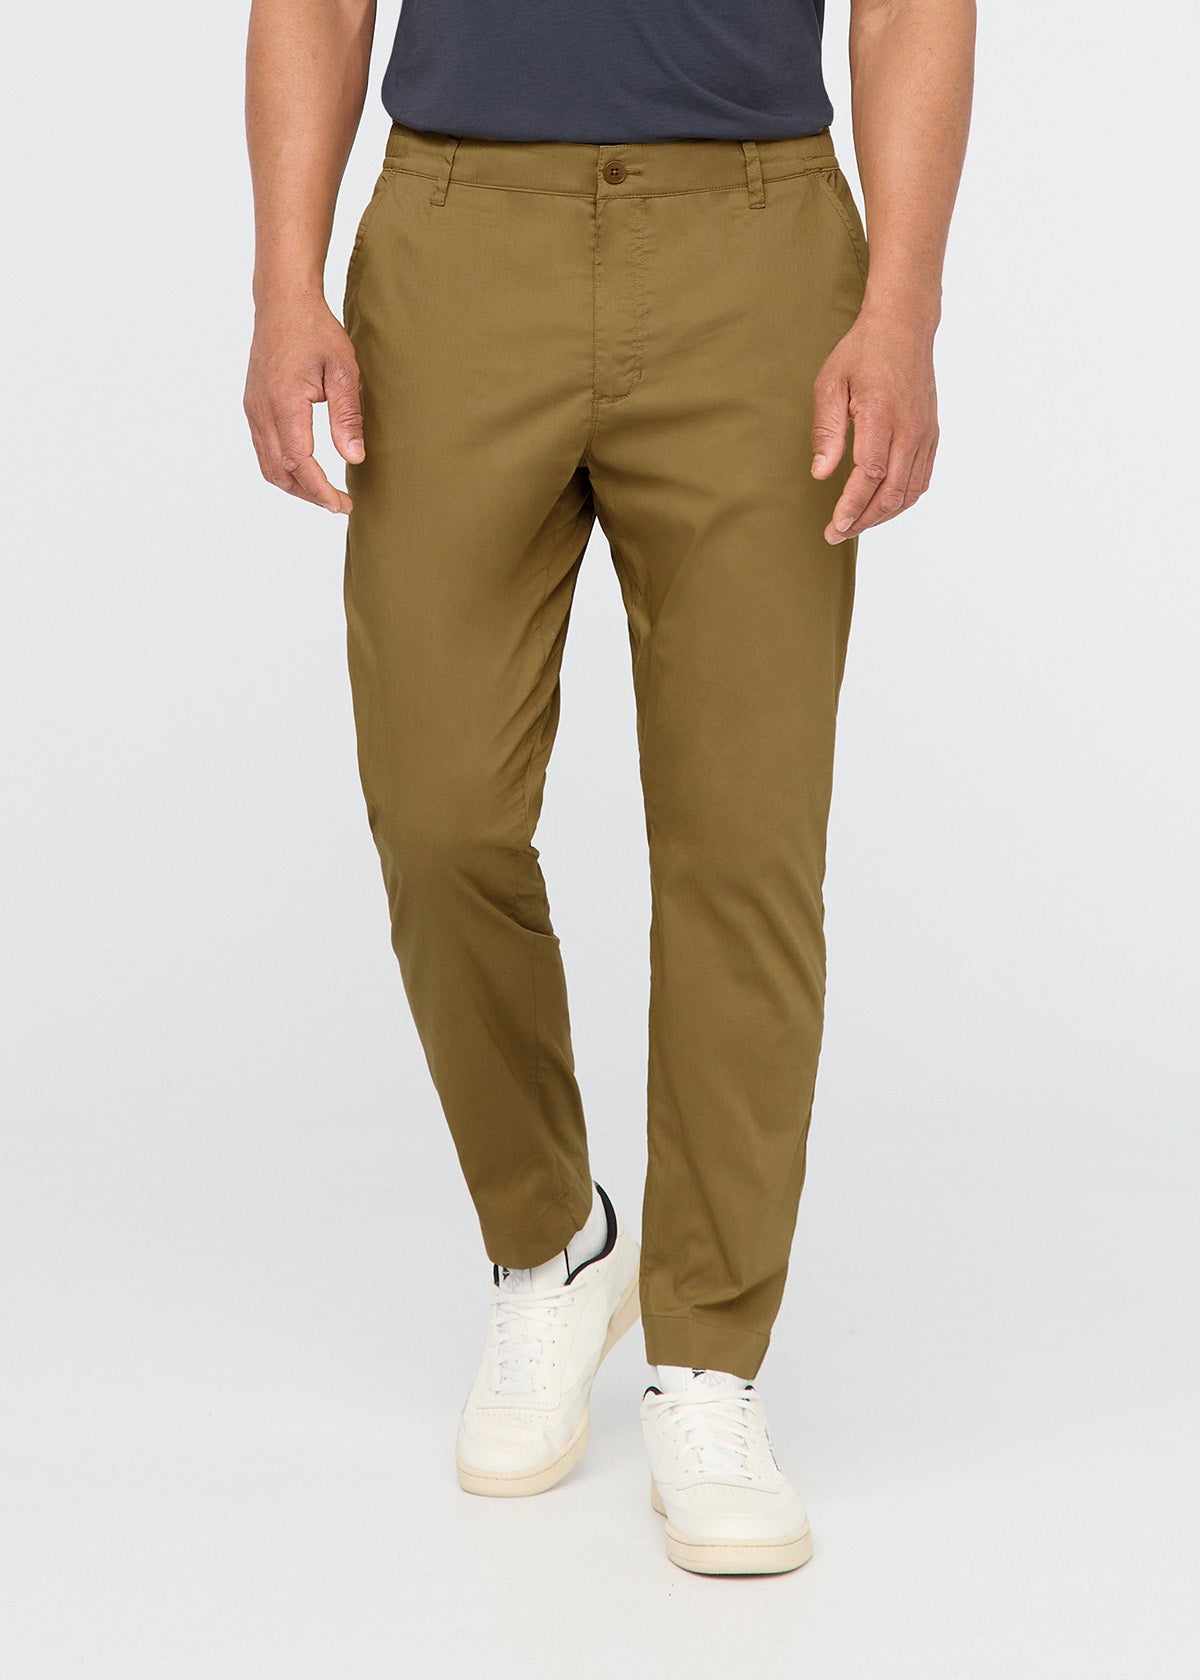 mens brown lightweight summer travel pants front